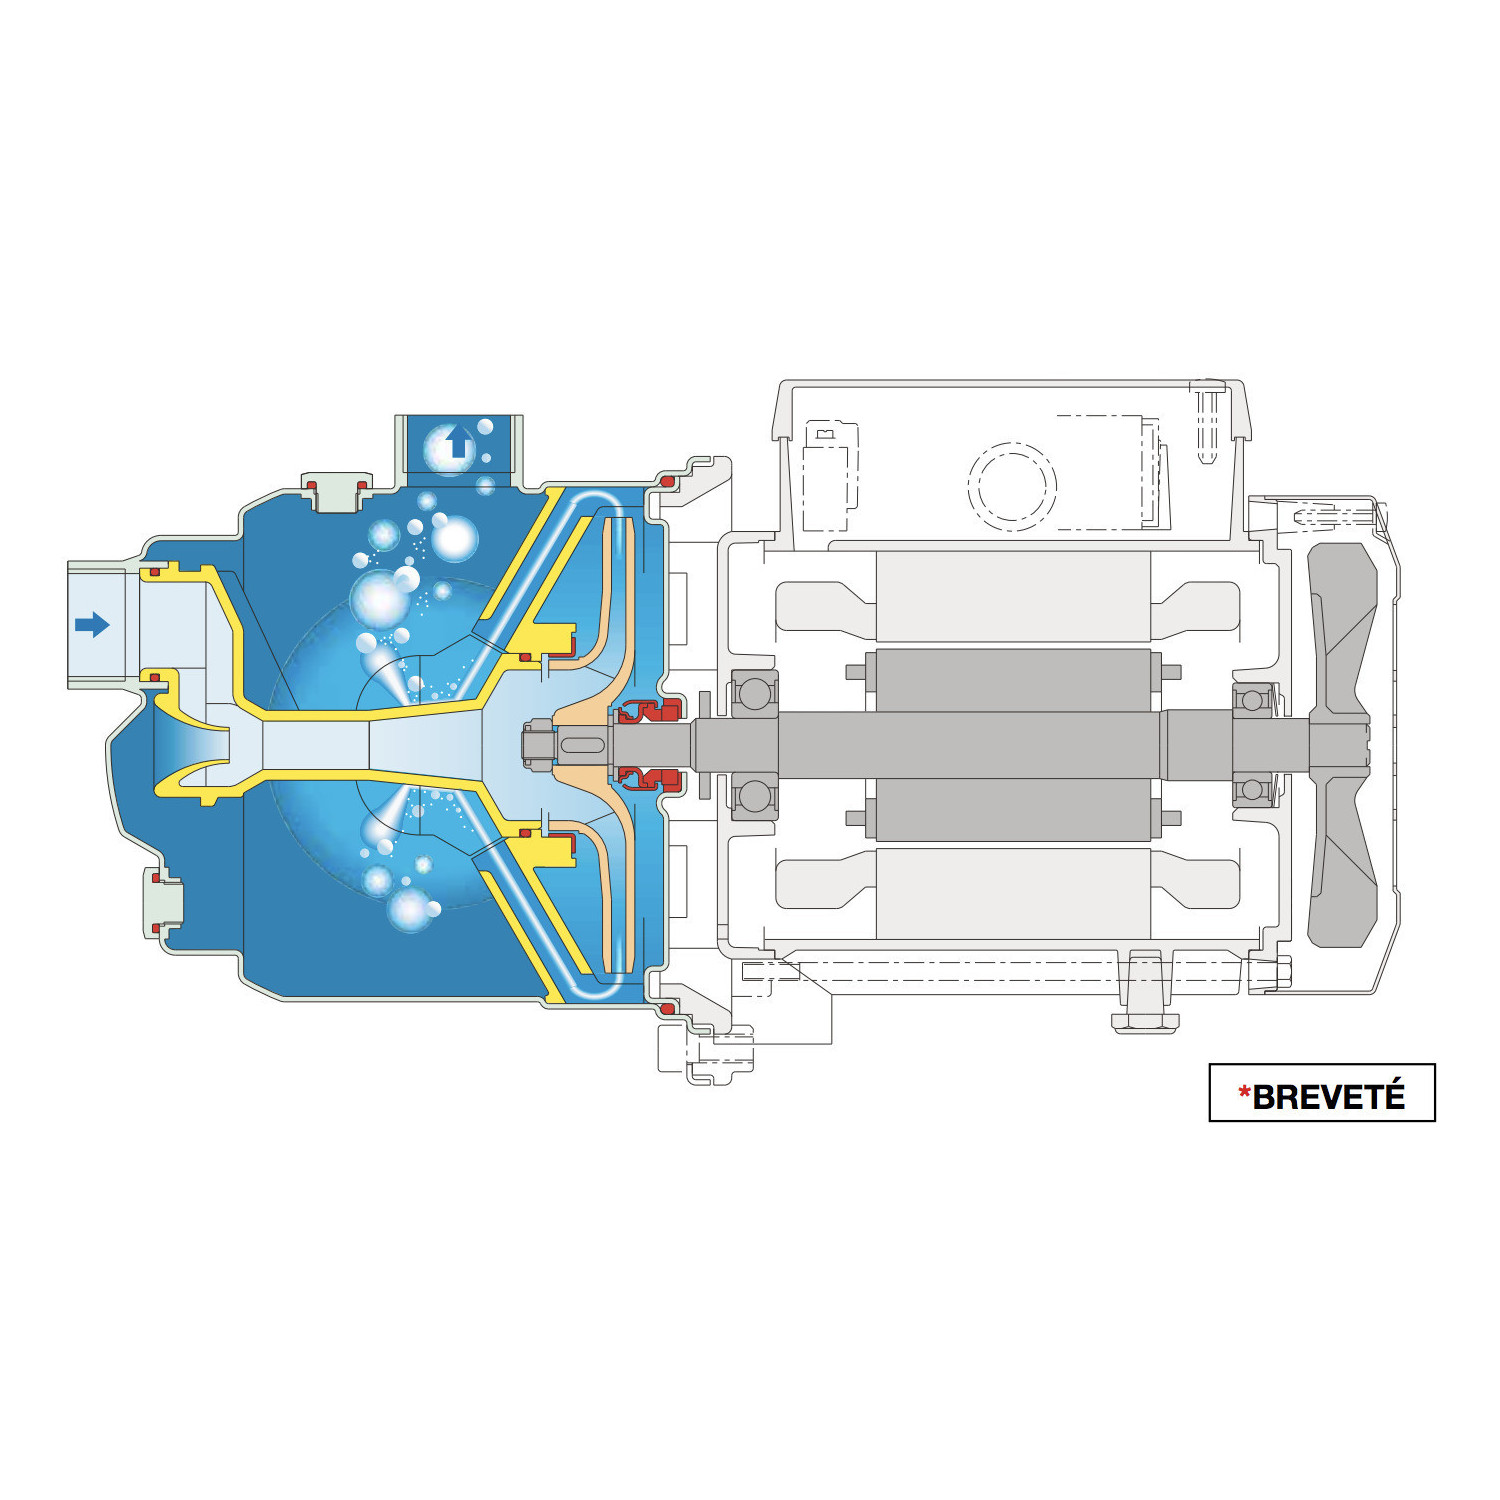 Pompe de surface autoamorçante Calpeda NGX280 - Inox 0,55 kW 3,2 m3/h 380V - Pompe à eau auto amorçante